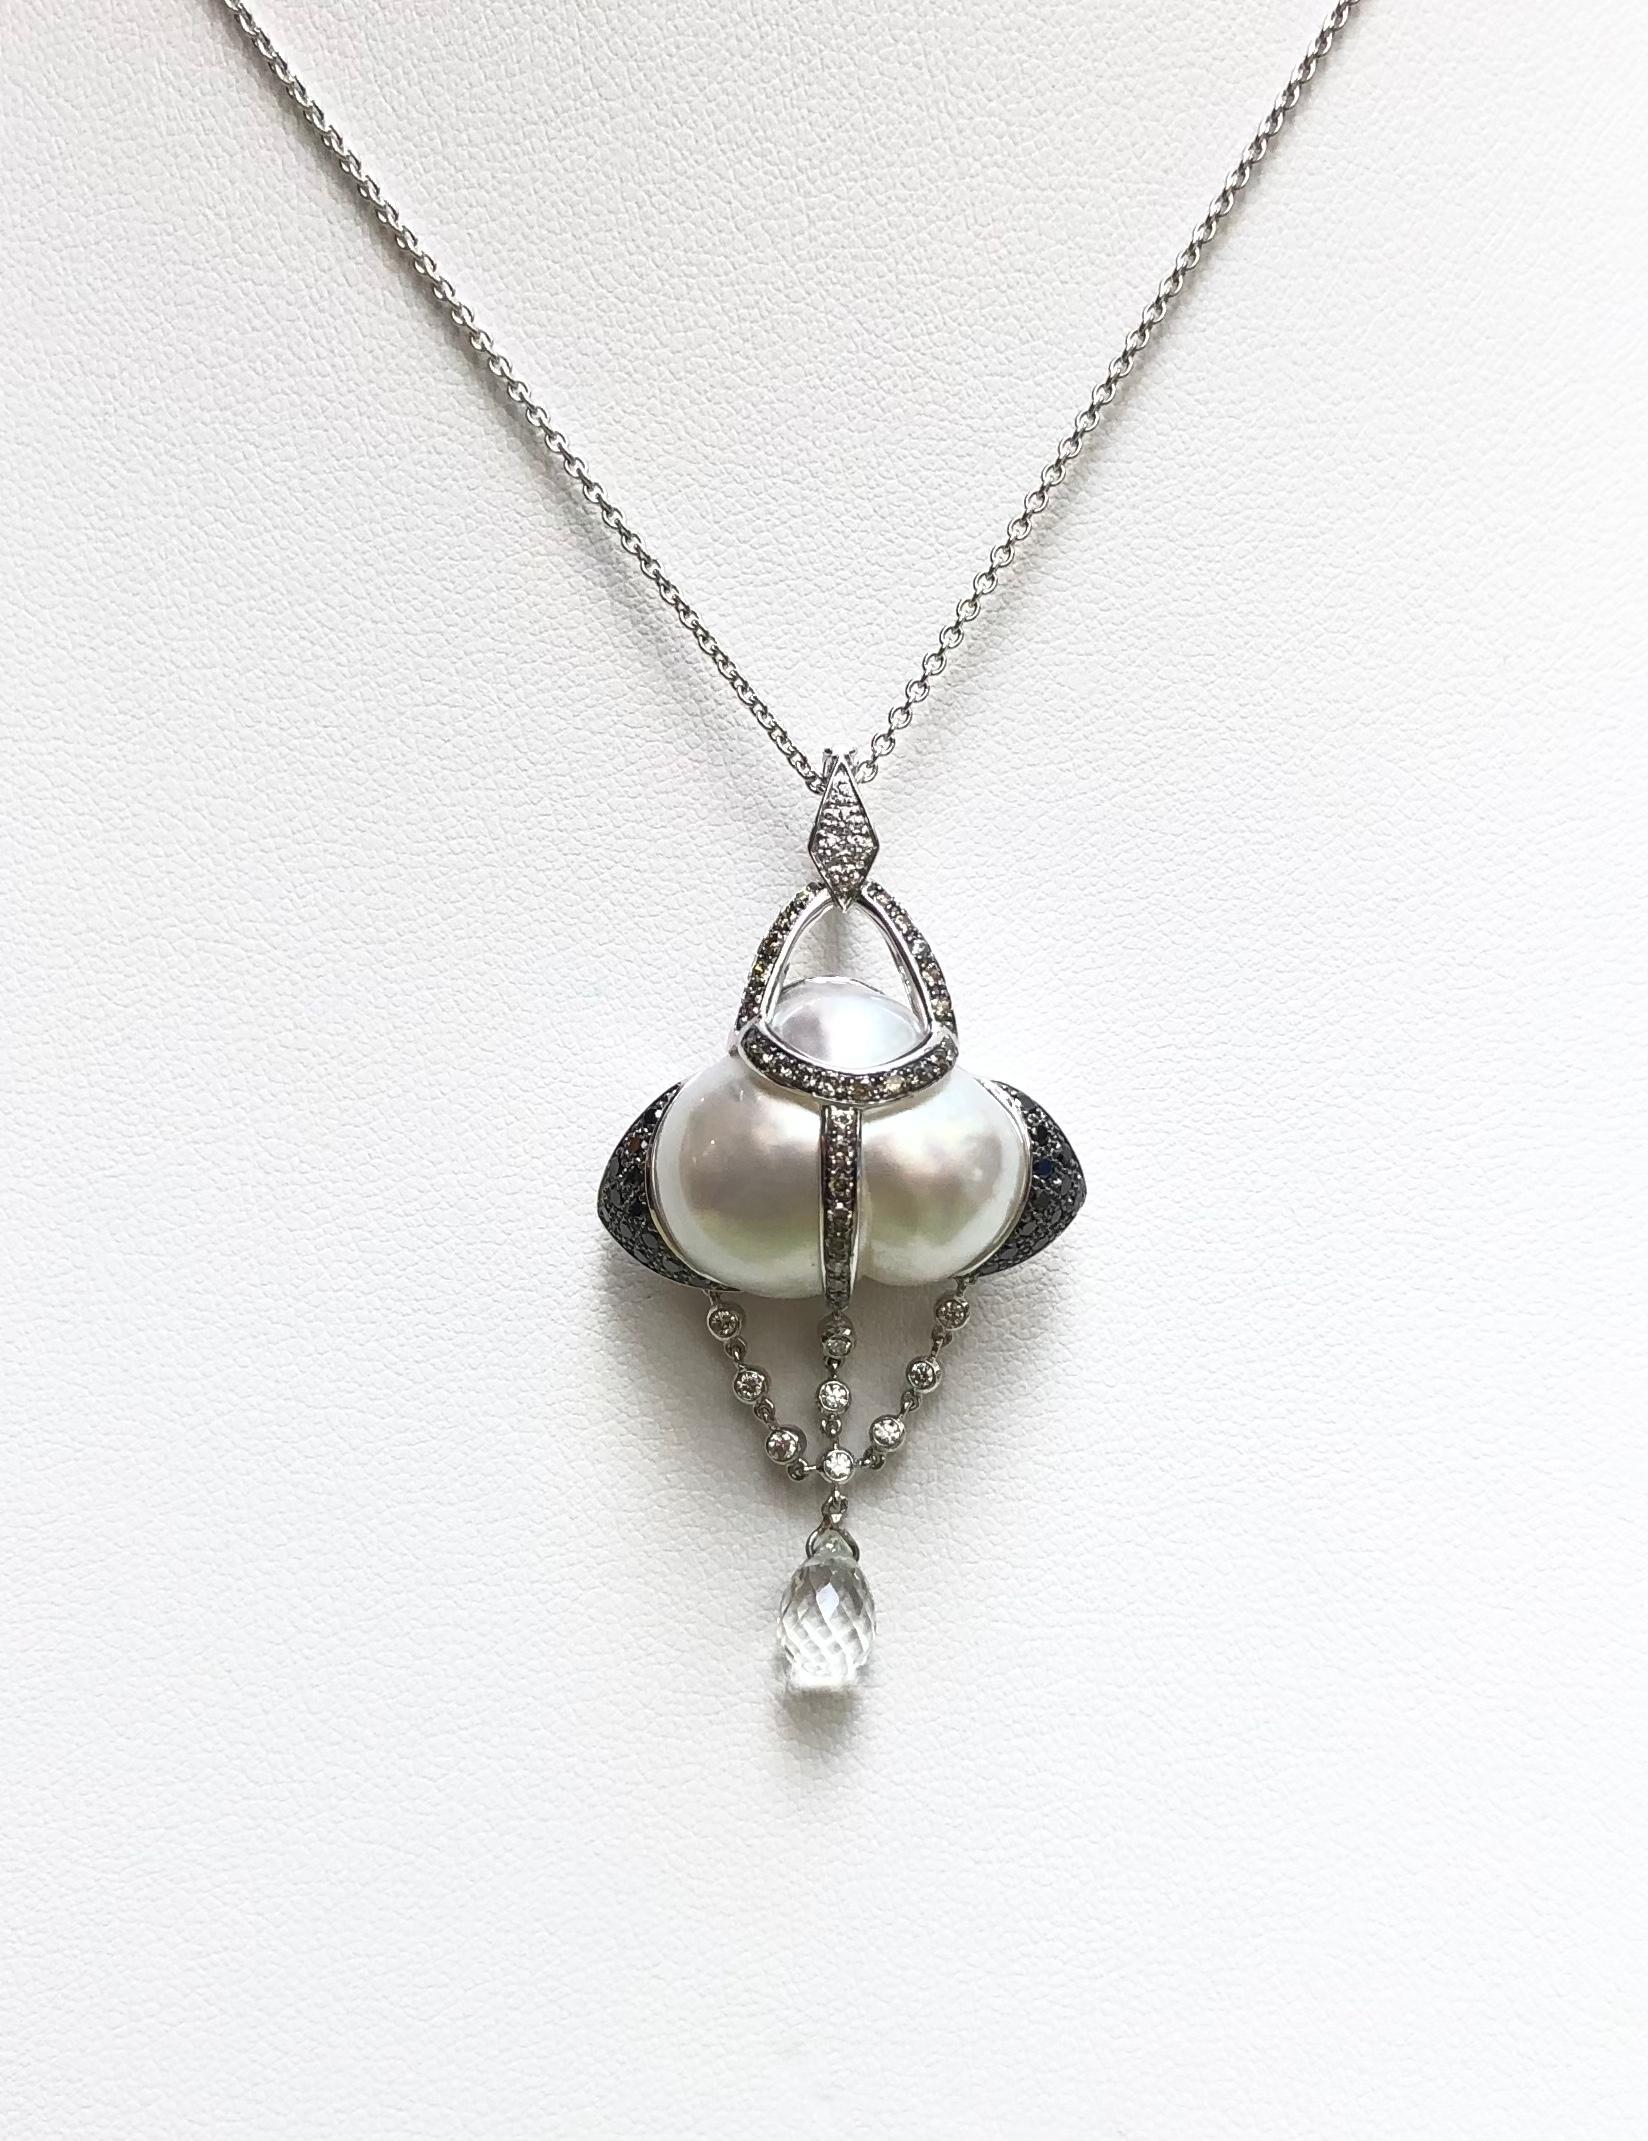 South Sea Pearl, Black Diamond 0.52 carat, Diamond 0.22 carat Pendant set in 18 Karat White Gold Settings
(chain not included)

Width: 2.7 cm 
Length: 4.9 cm
Total Weight: 11.98 grams

